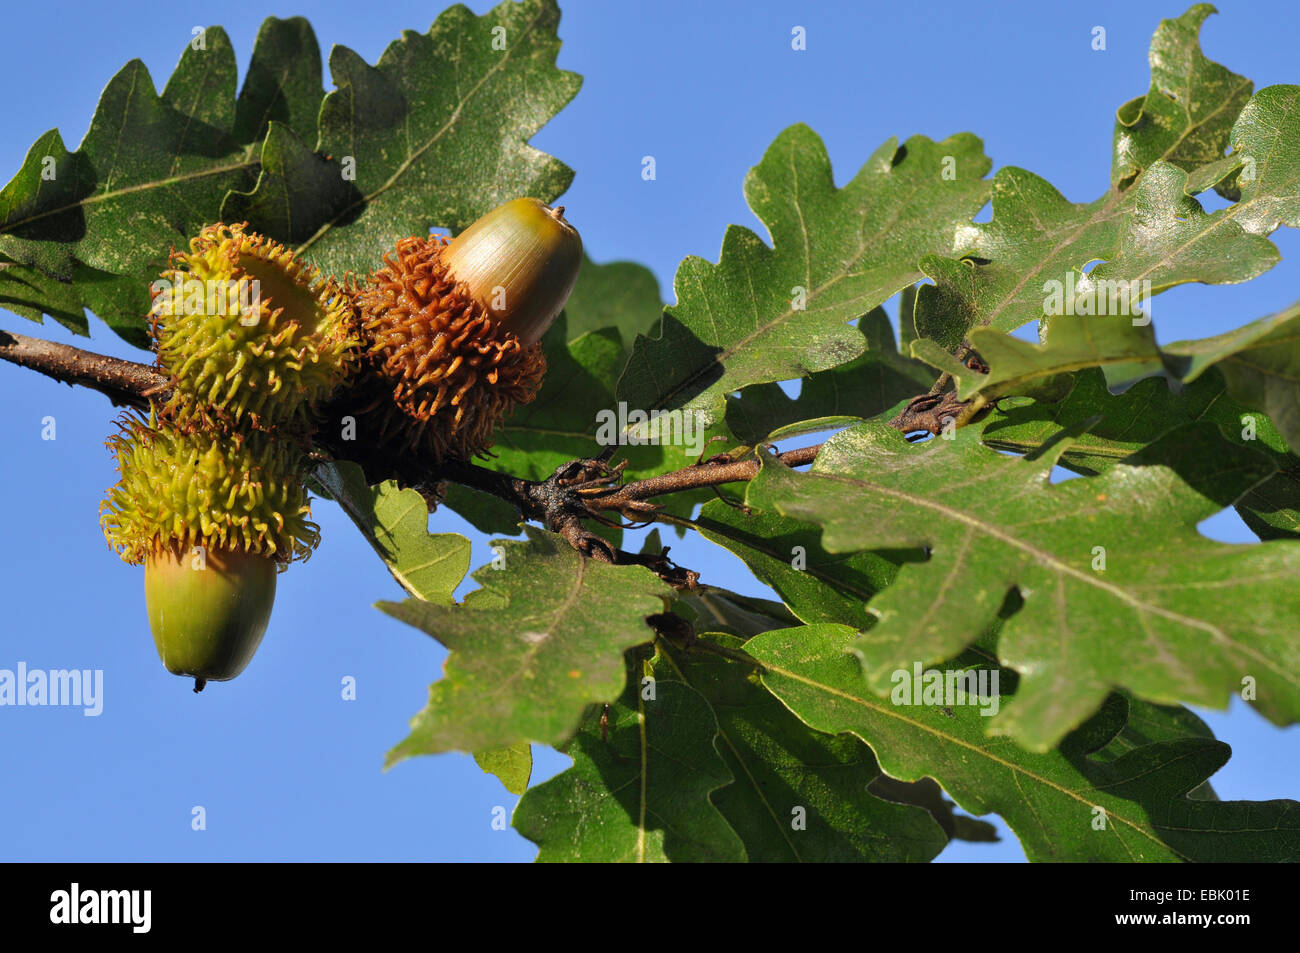 Turkey oak (Quercus cerris), branch with acorns Stock Photo